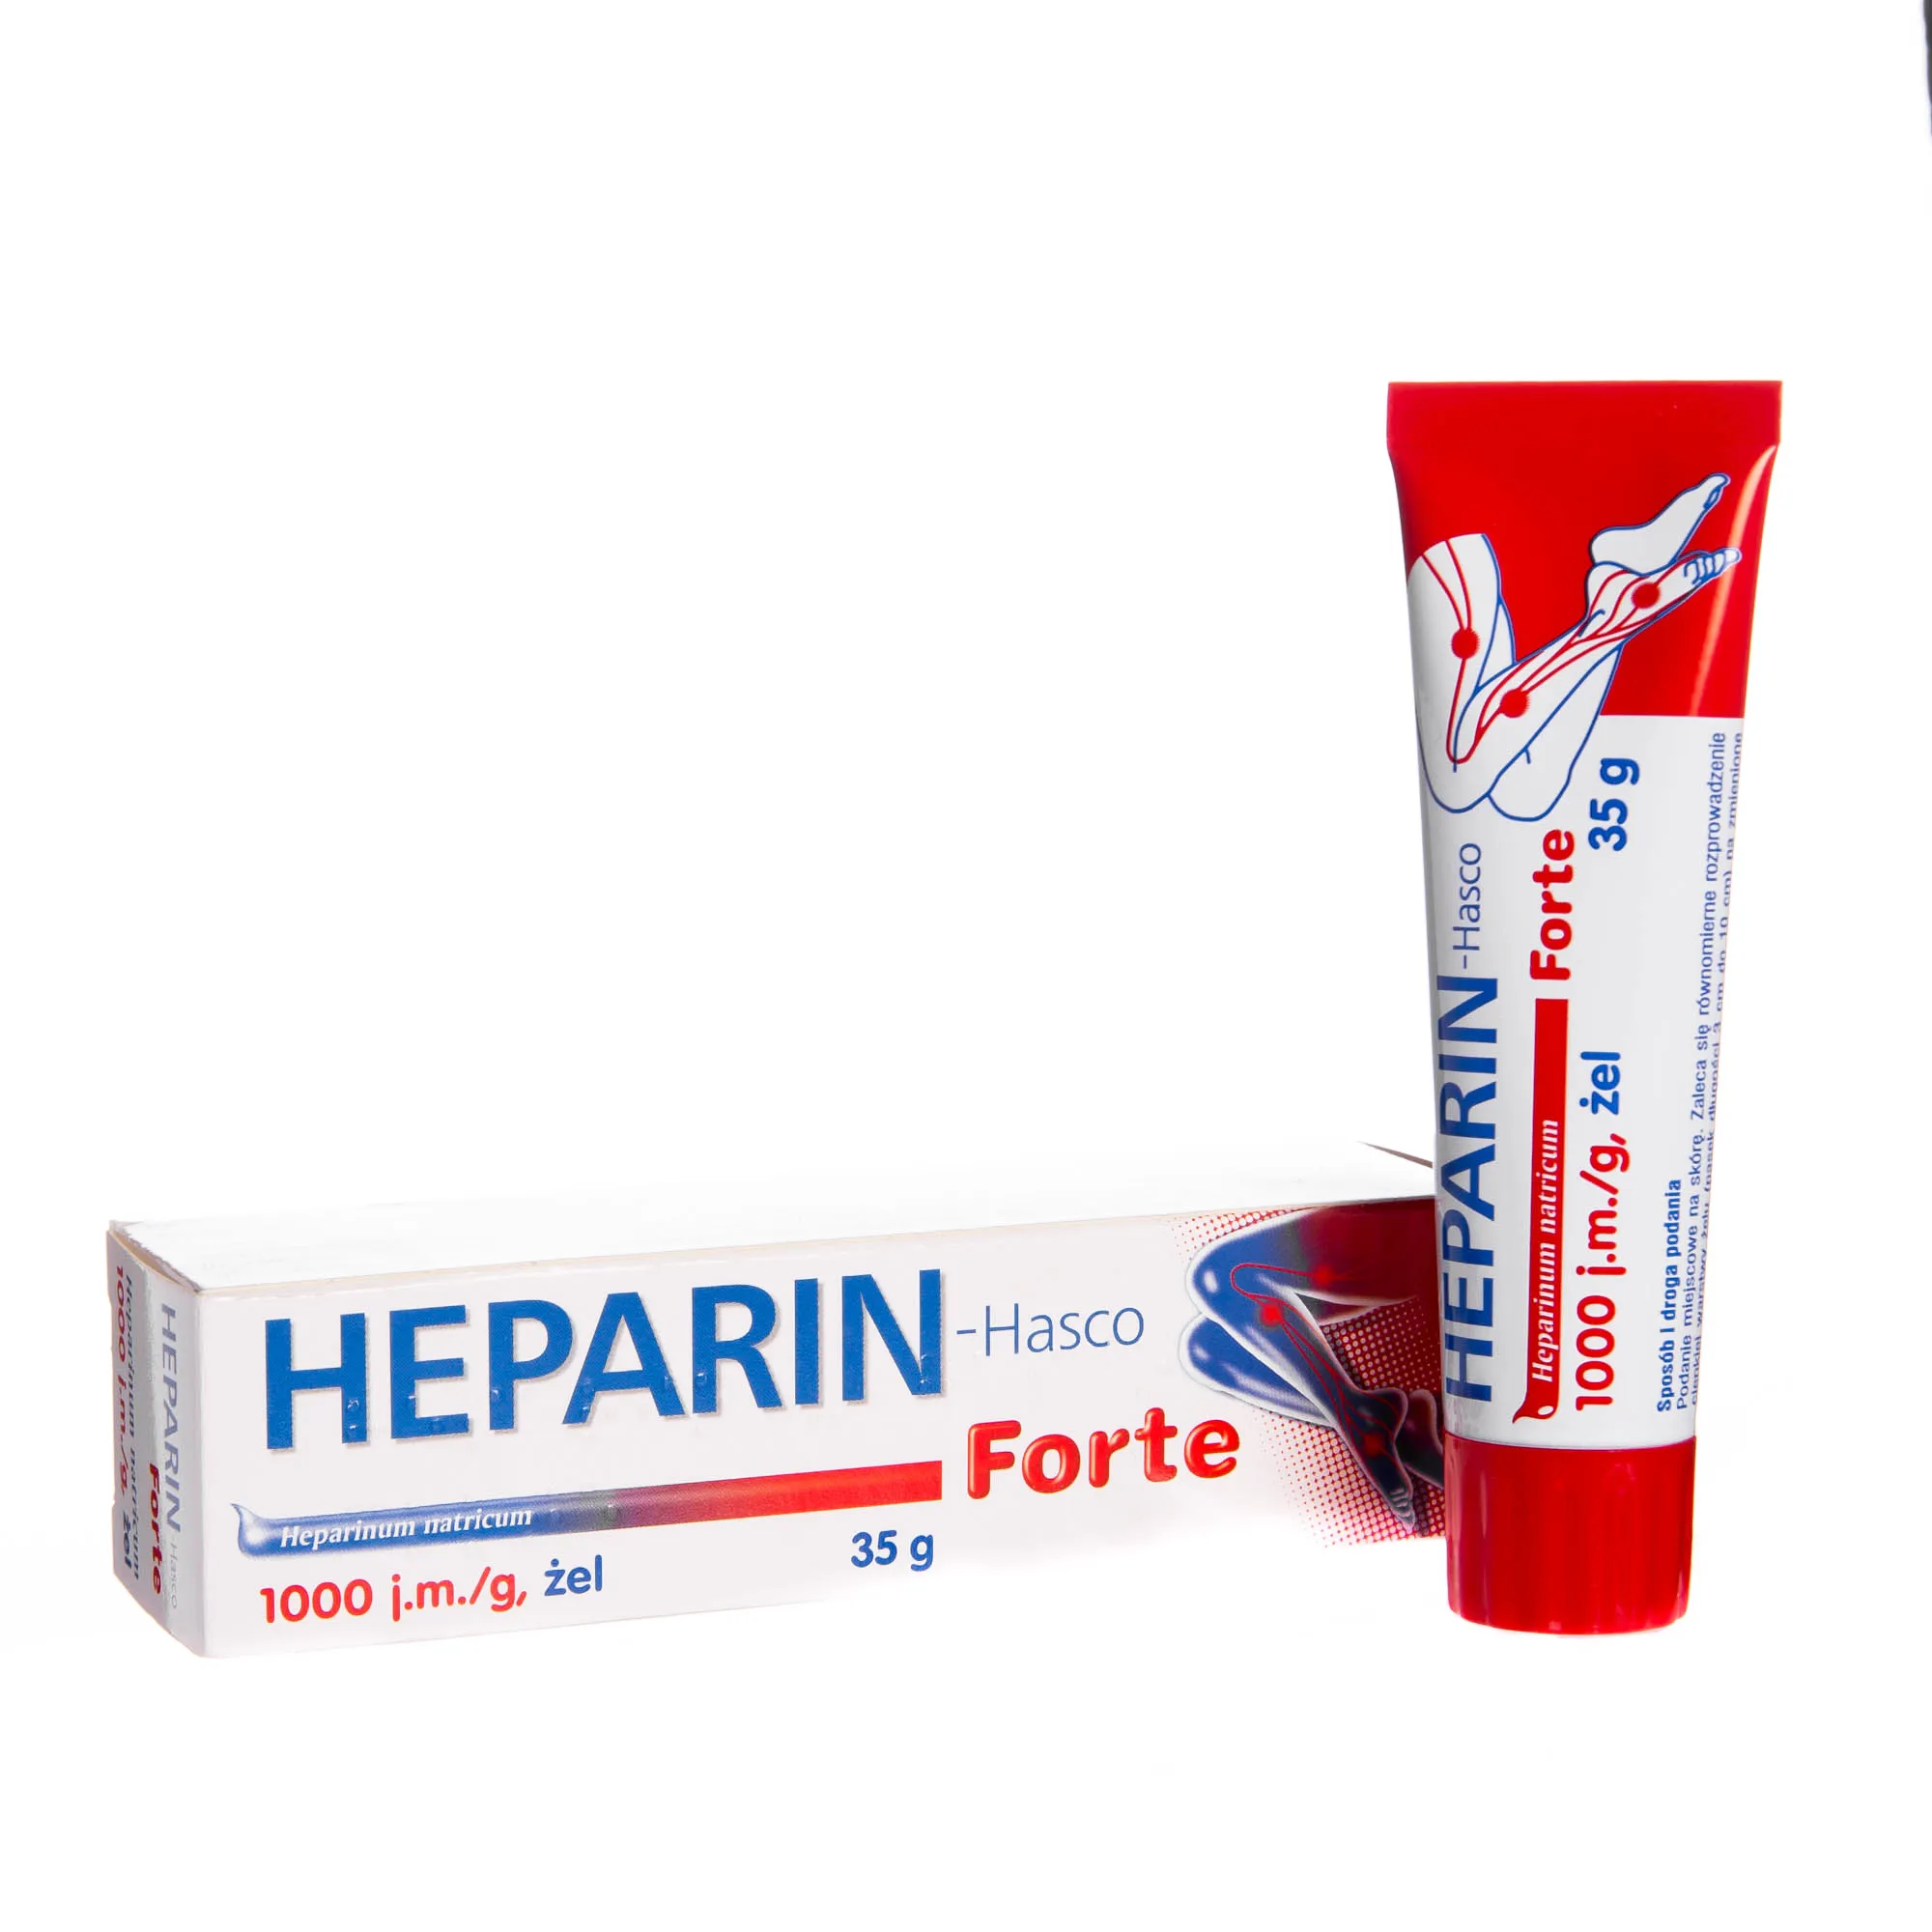 Heparin-Hasco Forte, 1000 j.m./g, żel, 35 g 